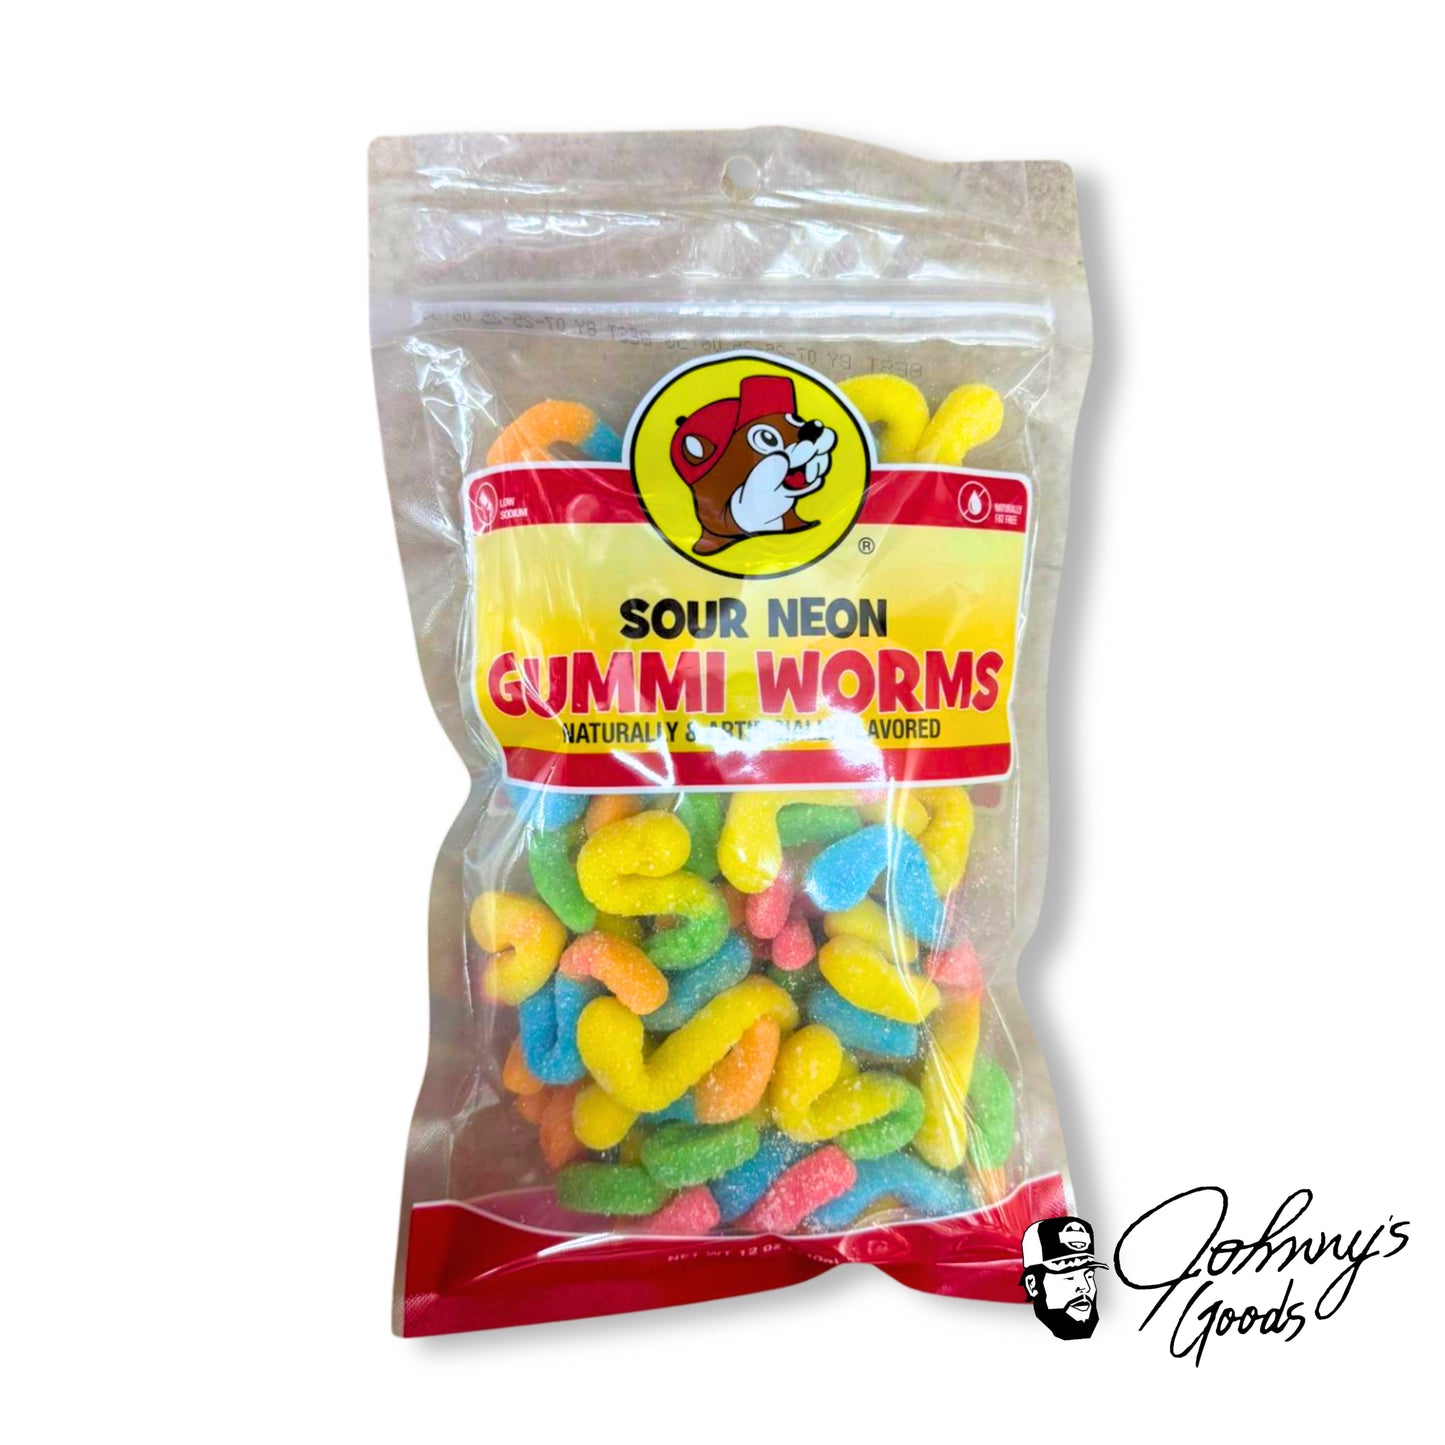 Buc-ee's Gummi Bears Candy